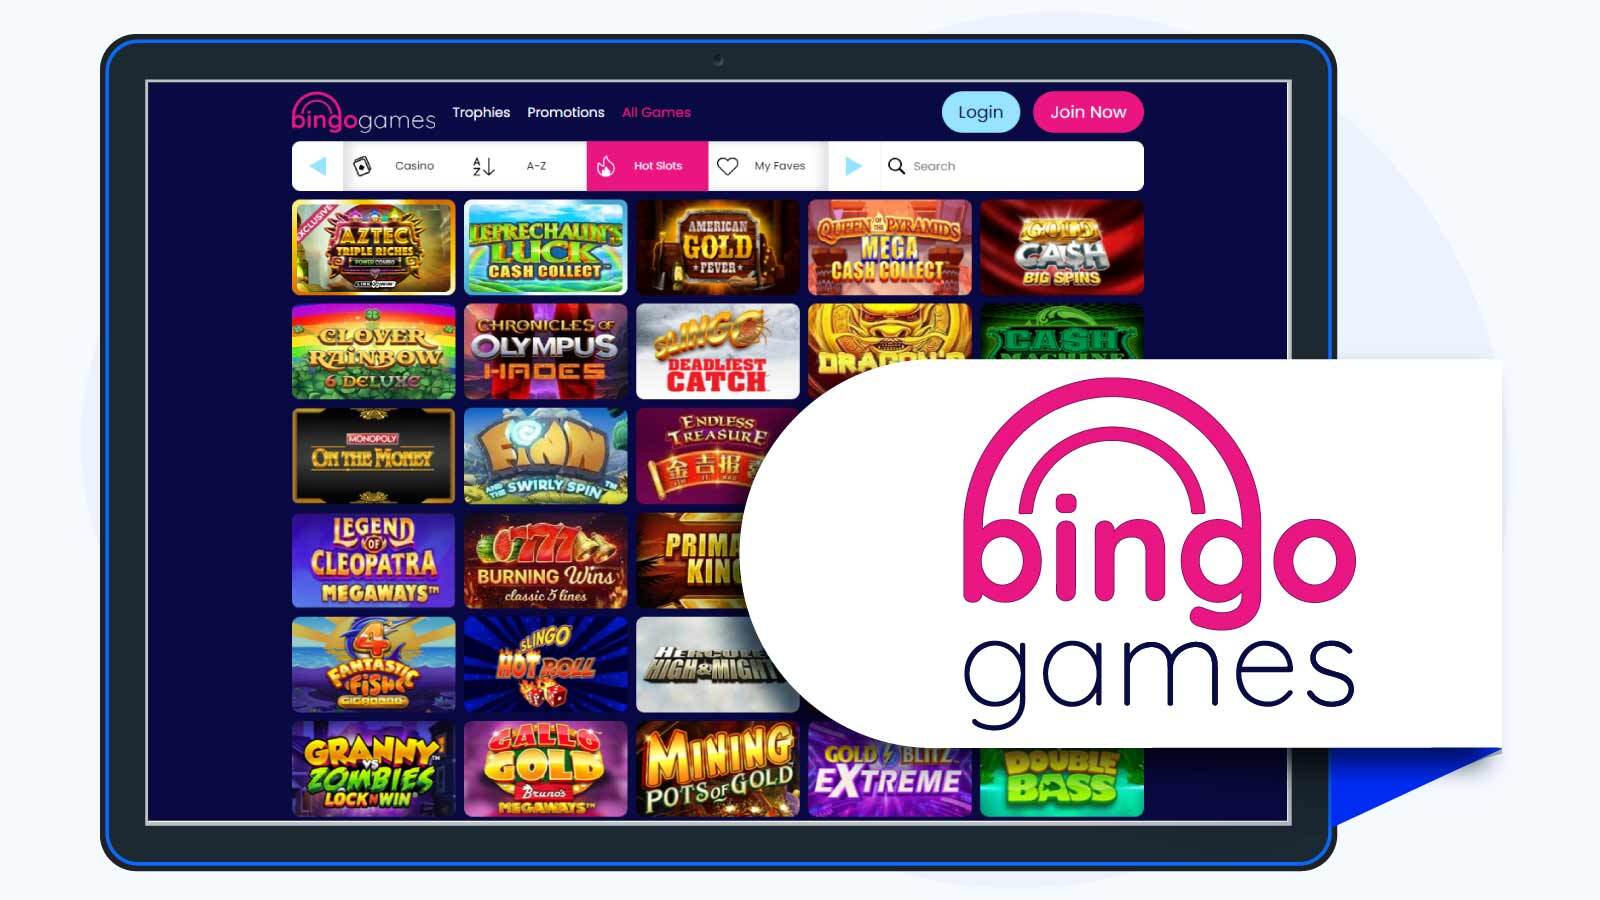 10 Free Spins No Deposit at Bingo Games